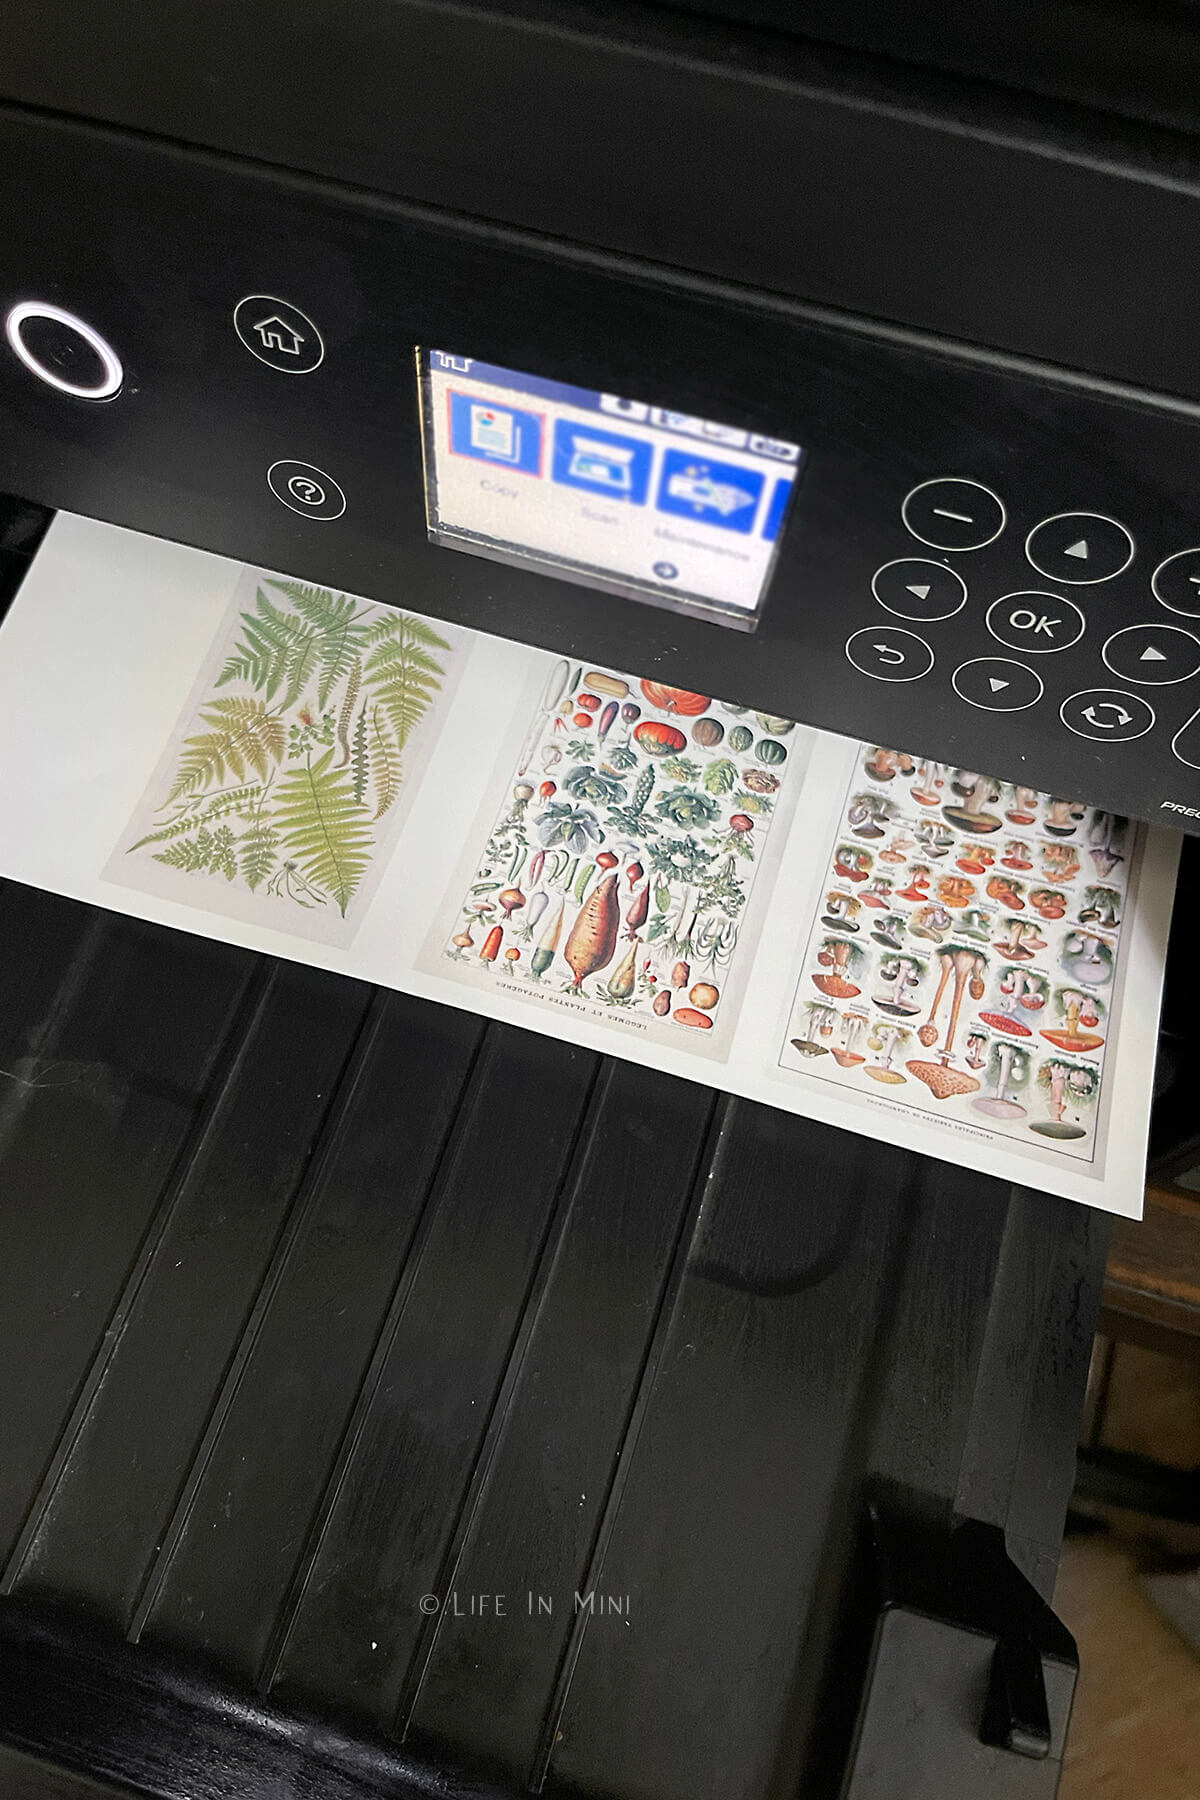 Miniature artwork being printed on a printer